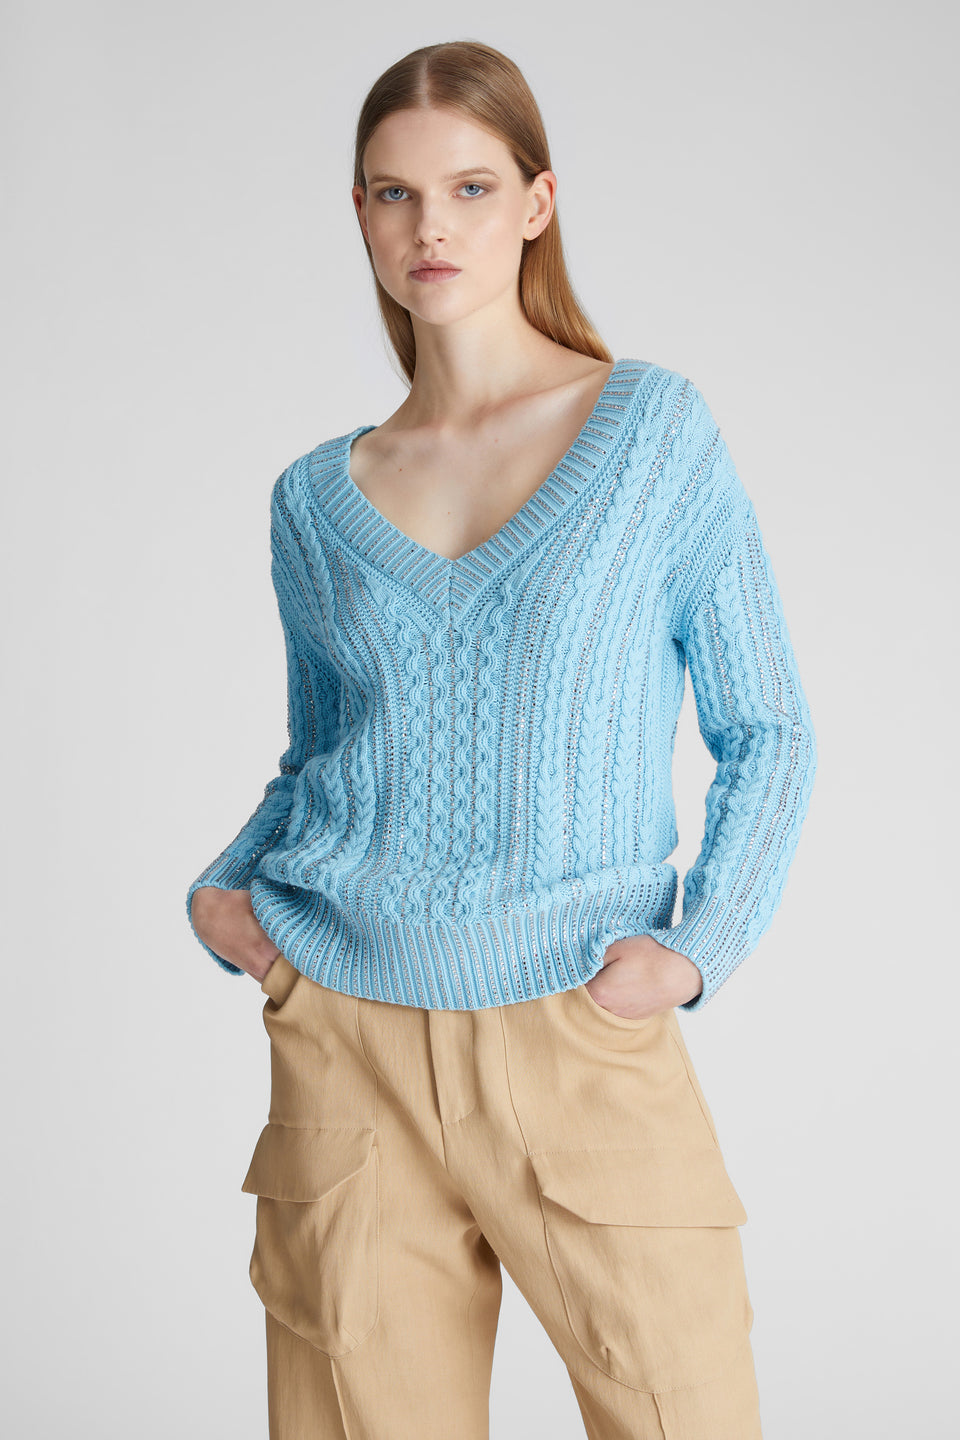 Light blue cotton sweater